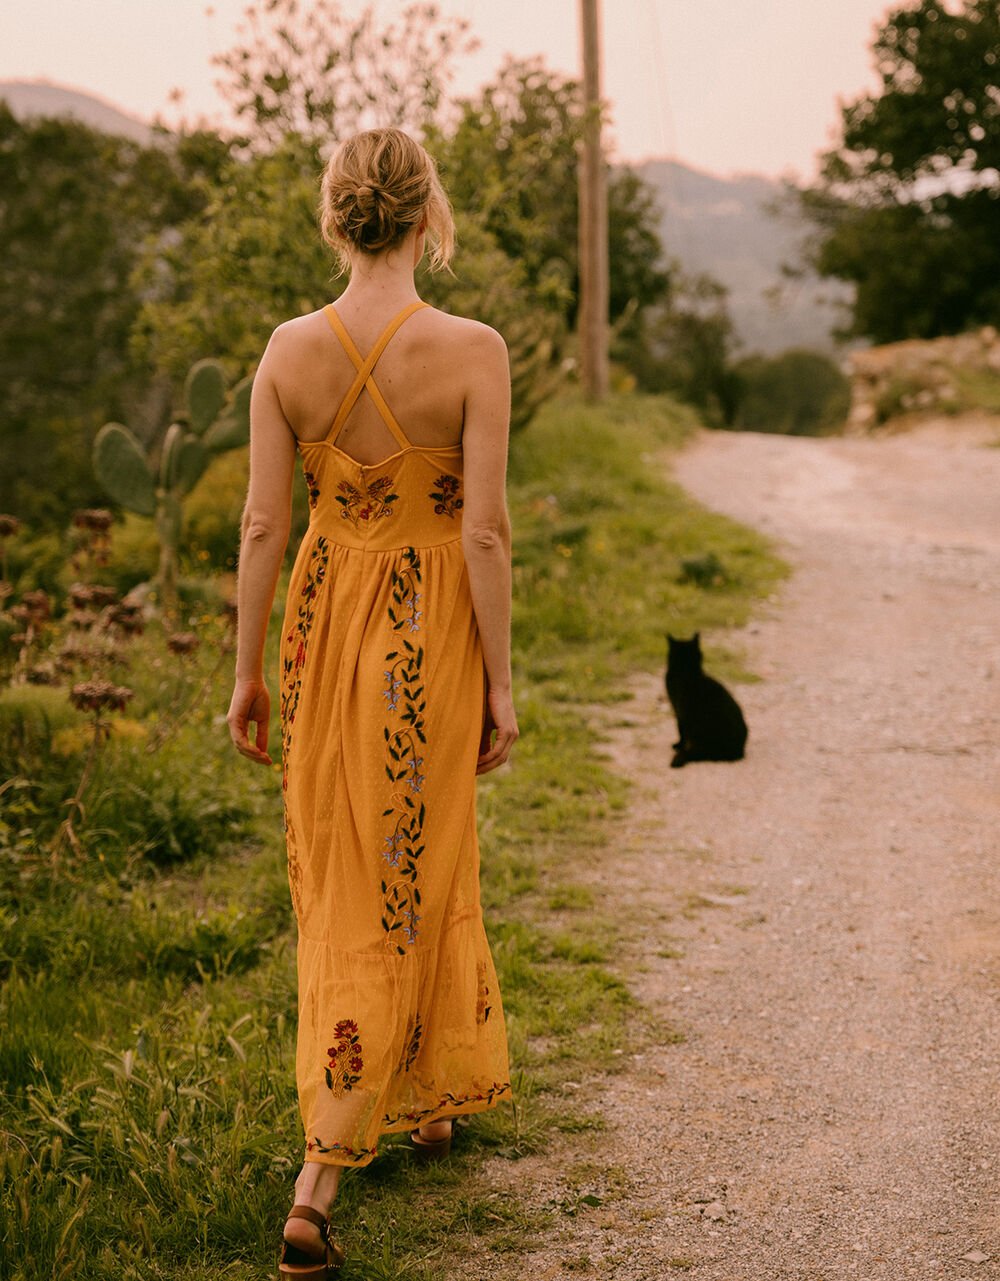 Women Dresses | Harlow Halter Embroidered Dress Yellow - OK56135